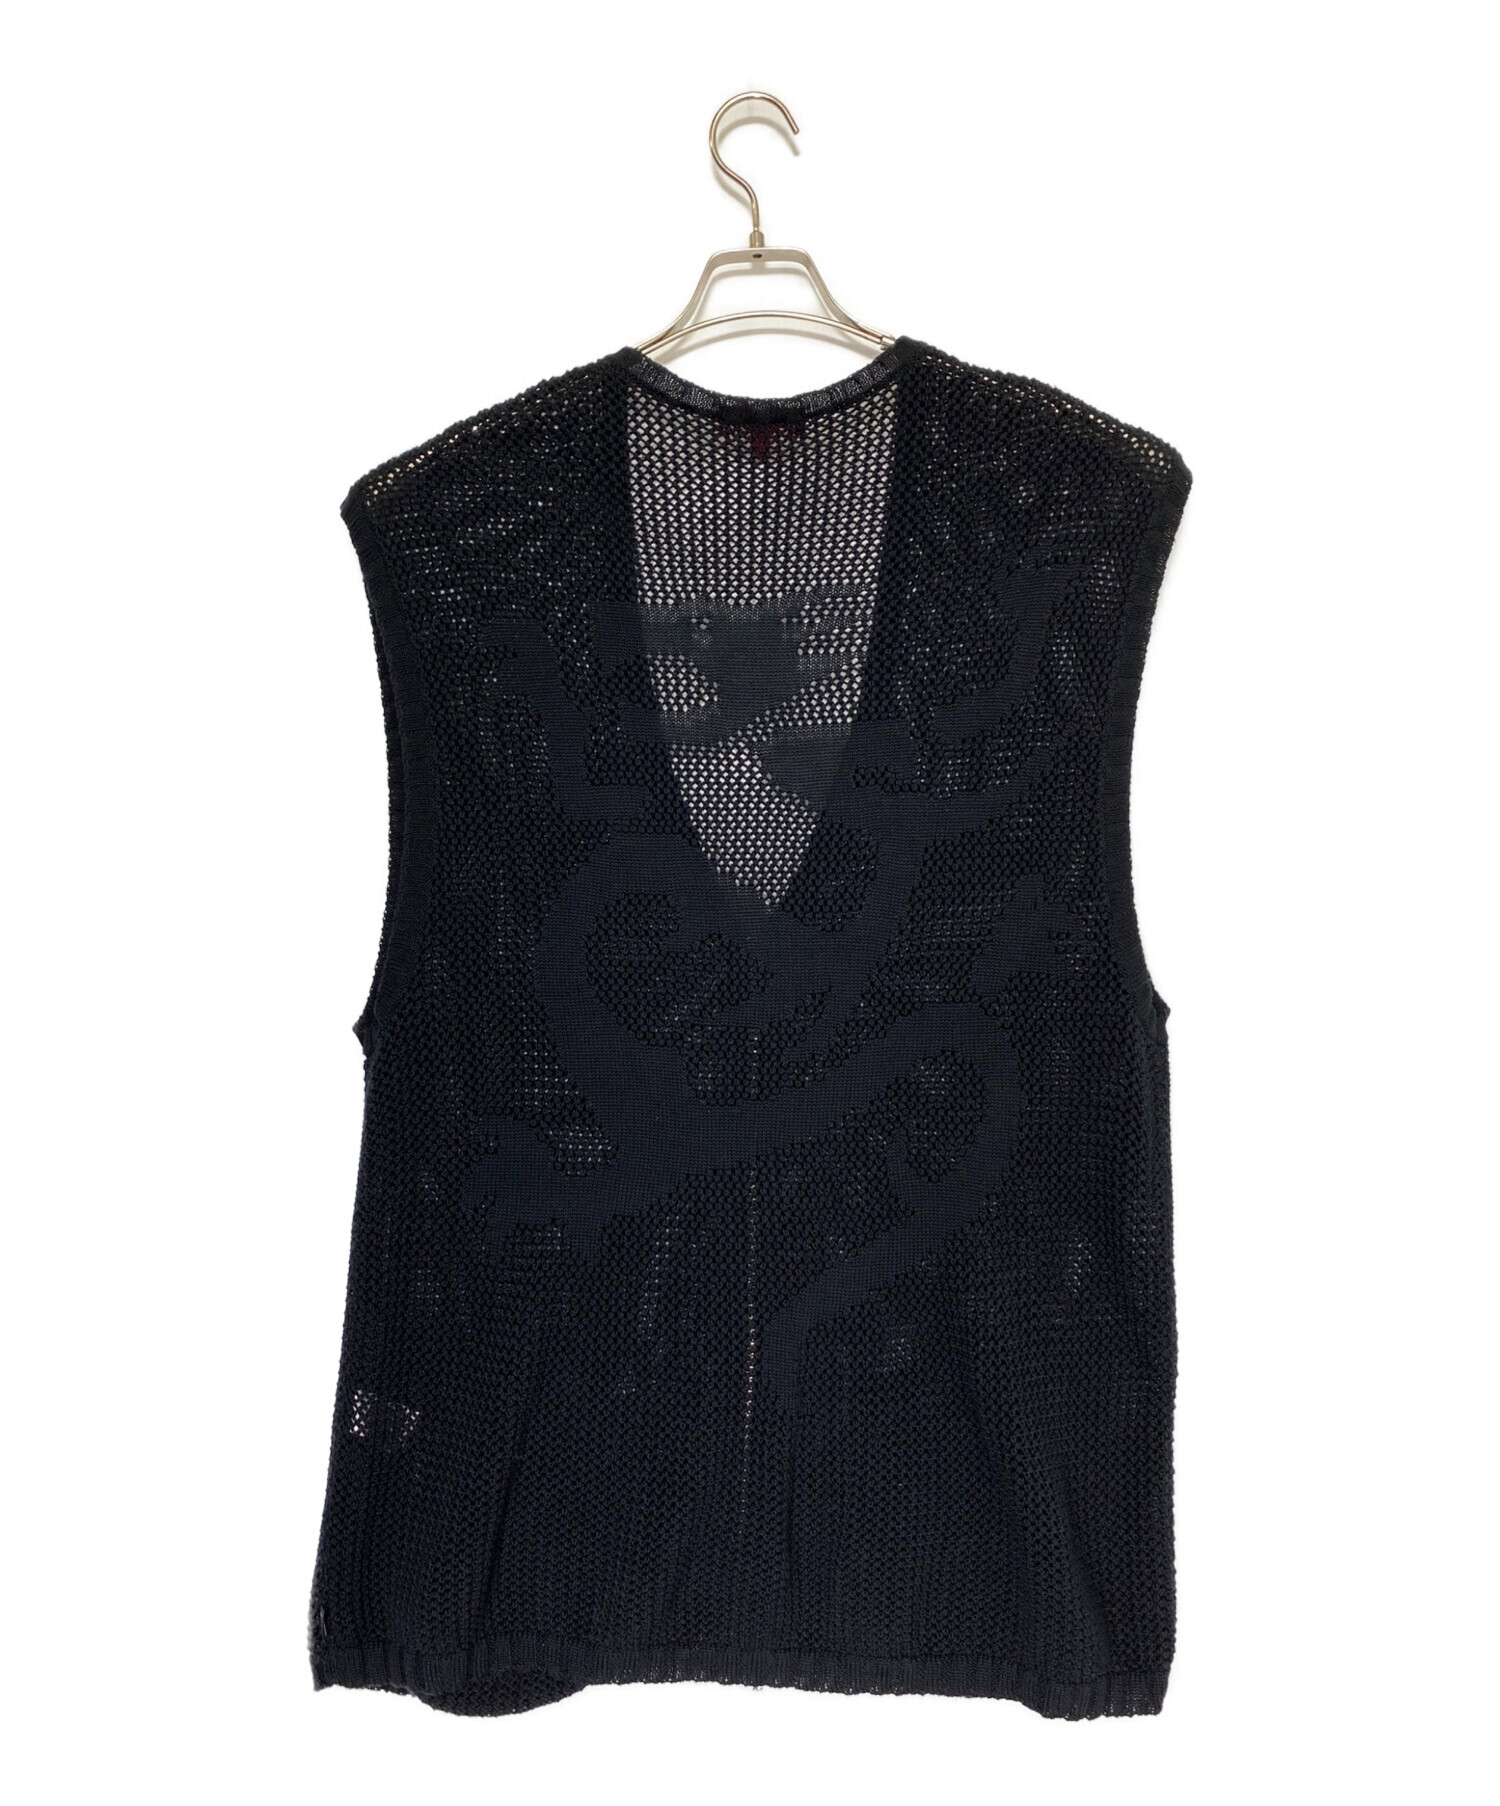 SUPREME (シュプリーム) Dragon Zip Up Sweater Vest ブラック サイズ:L